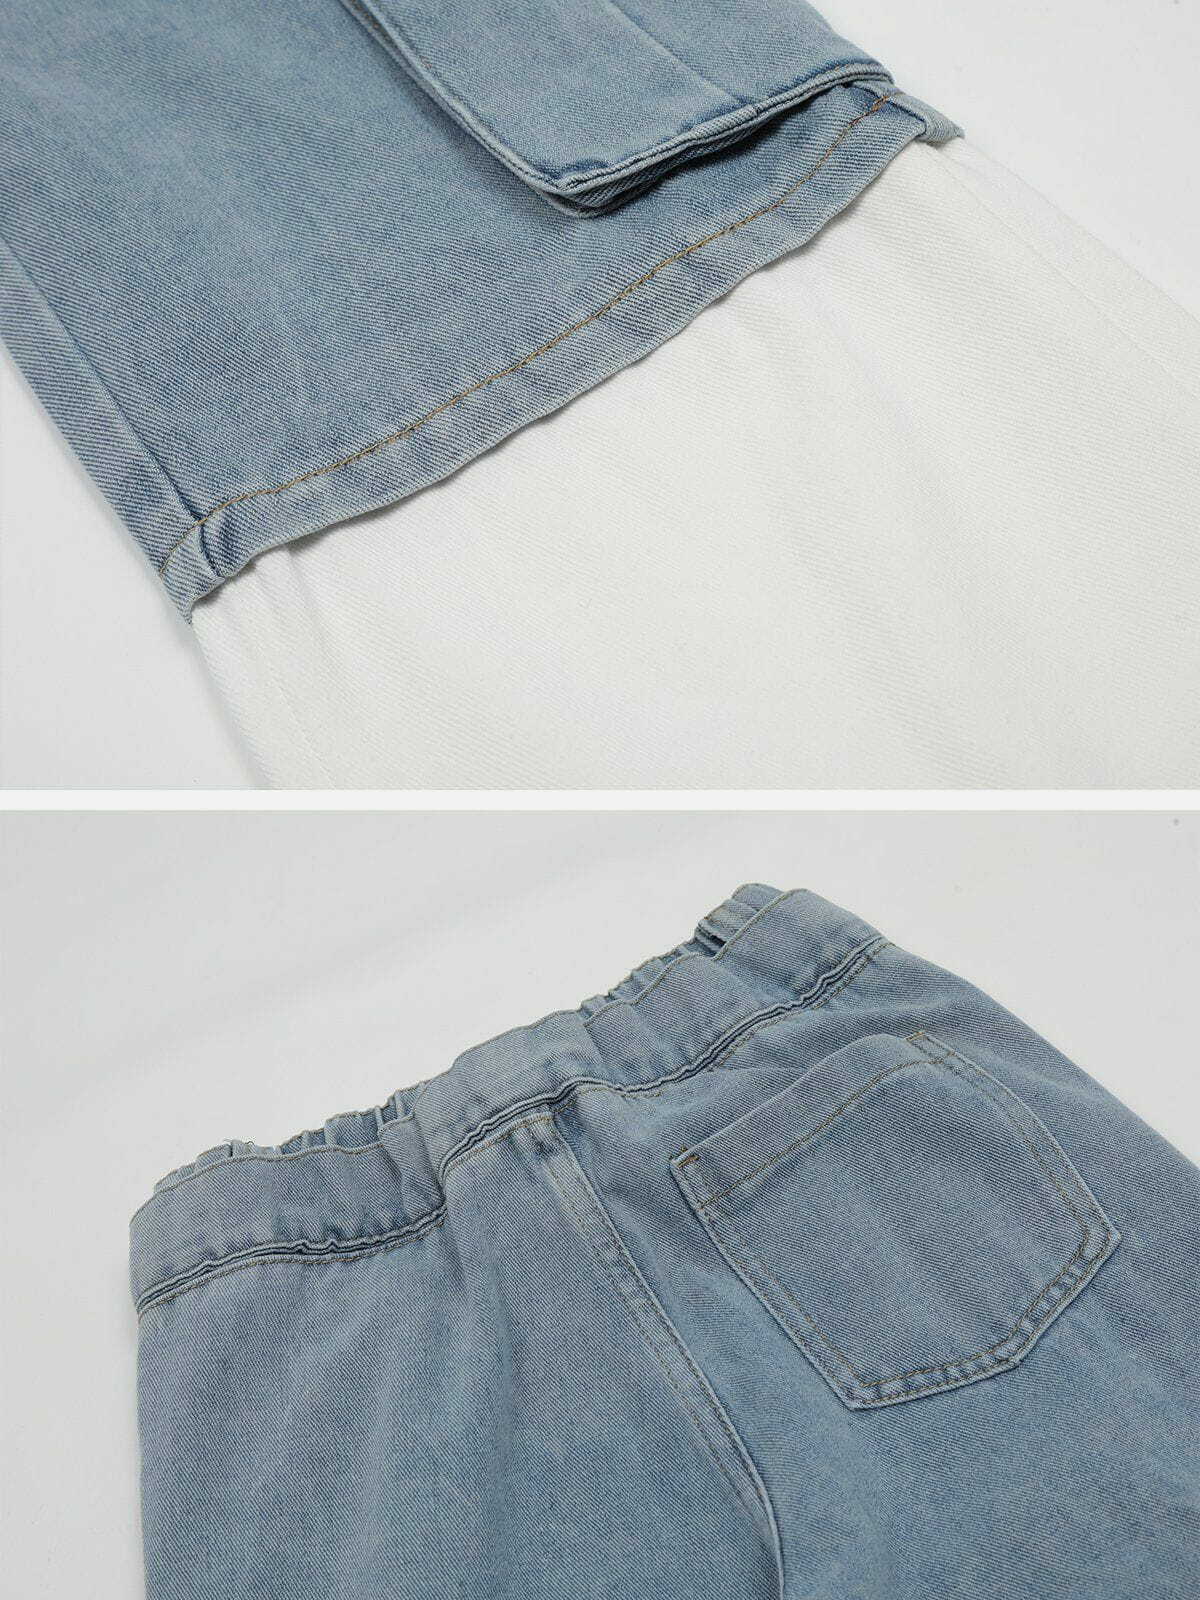 patchwork denim jeans vintage & edgy urban style 7567